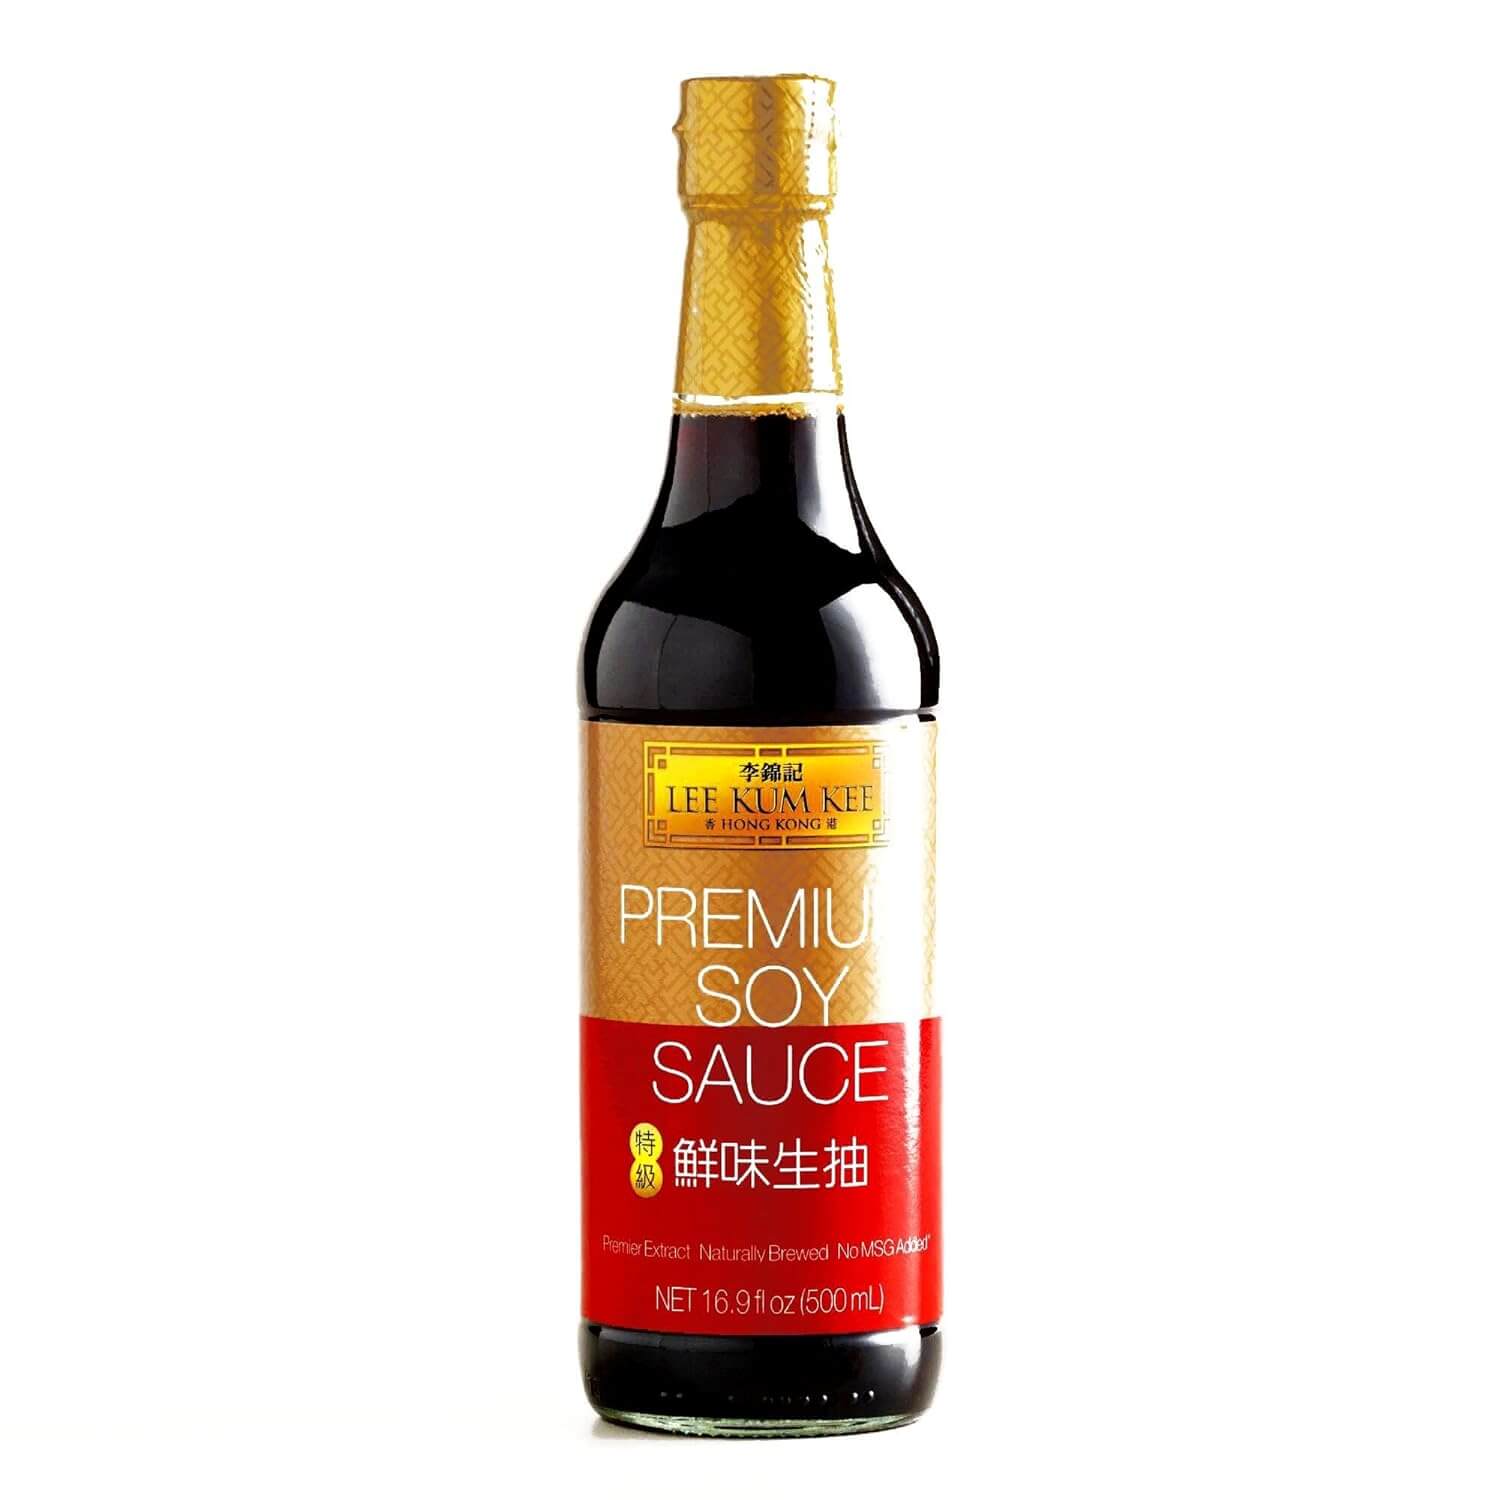  Lee Kum Kee Premium Soy Sauce